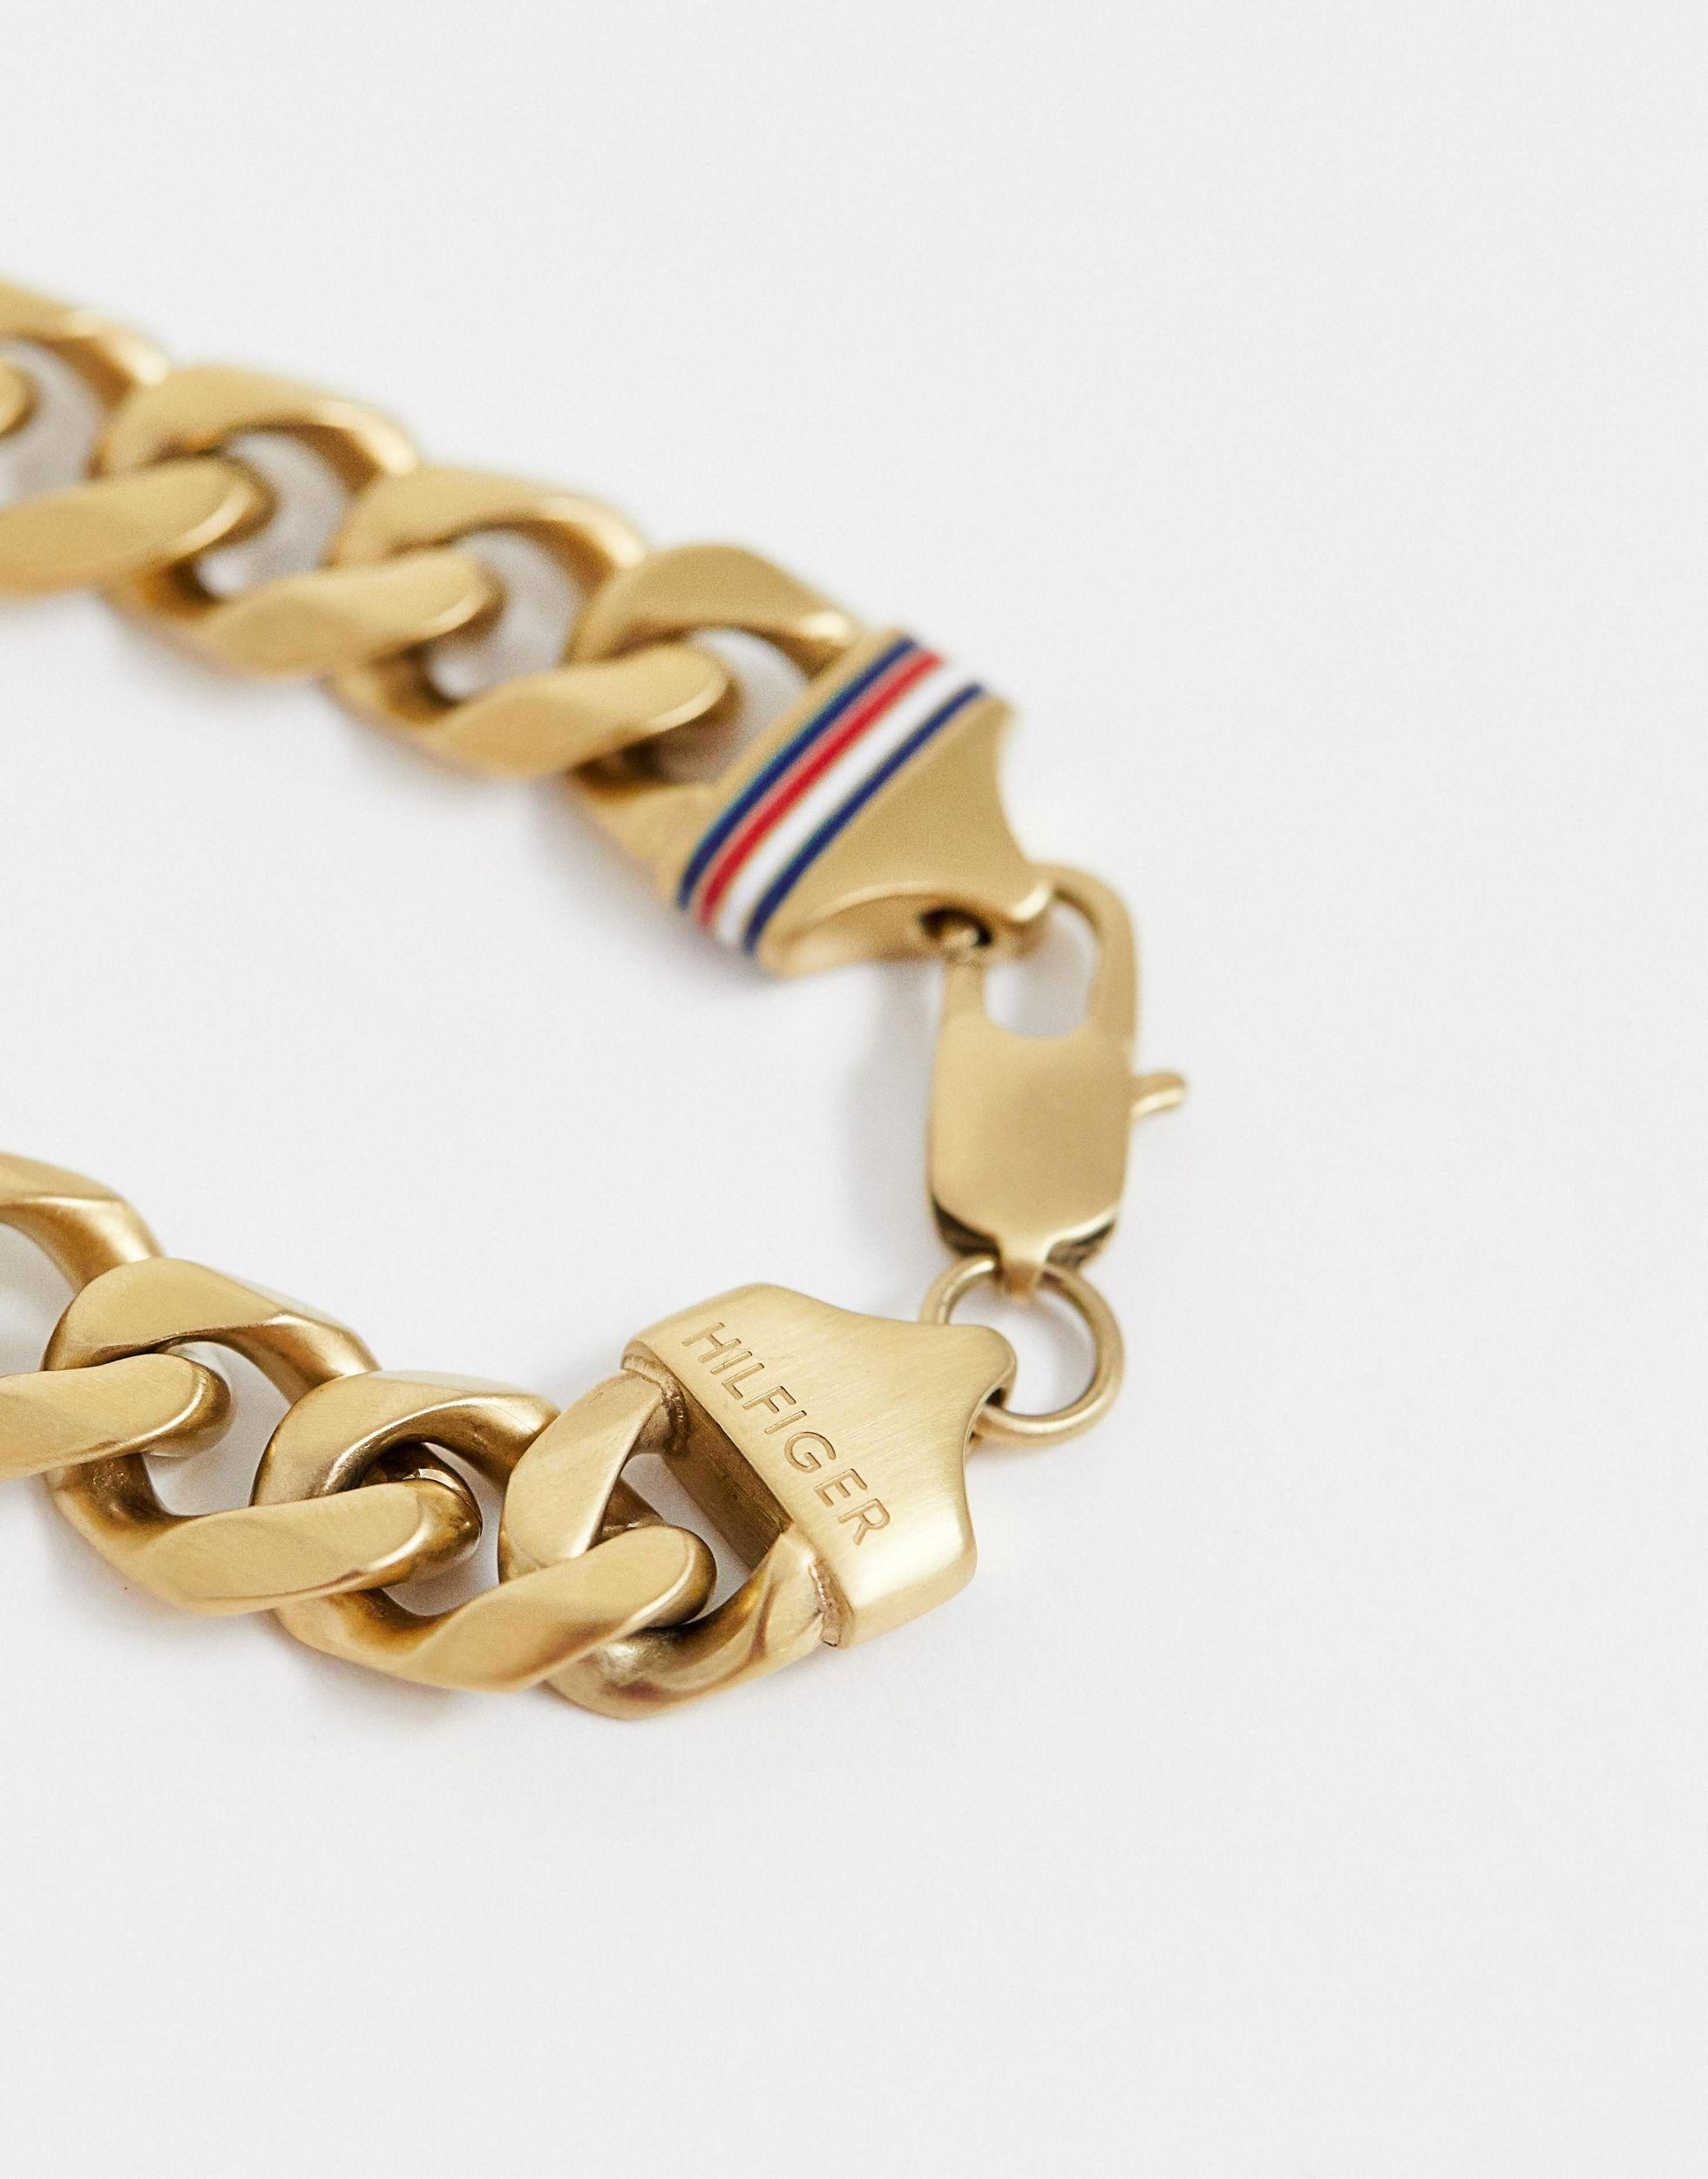 Tommy Hilfiger Chain Link Bracelet in 